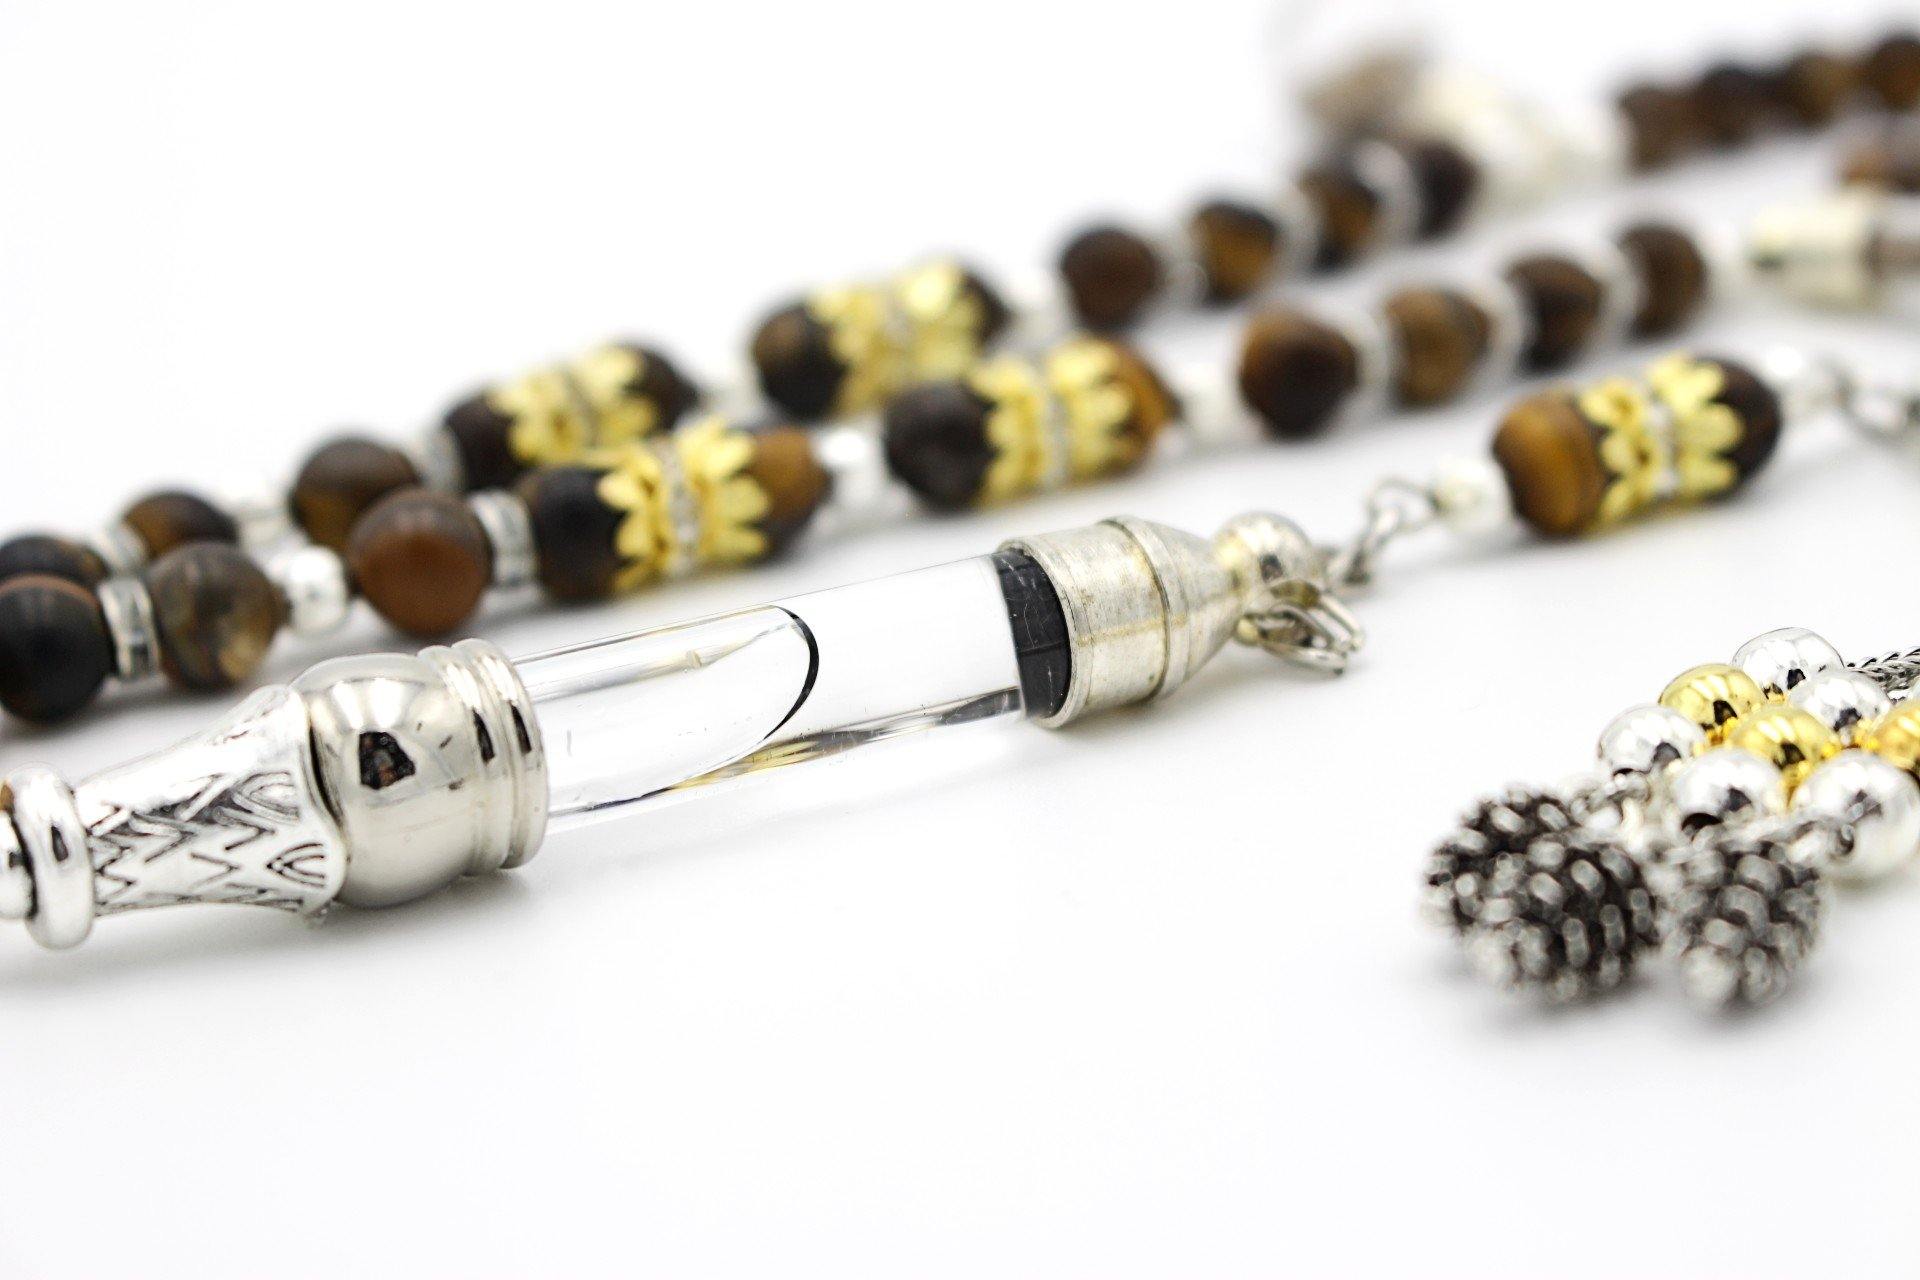 Bronzite prayer beads gemstones silver jewellery luxury tesbih